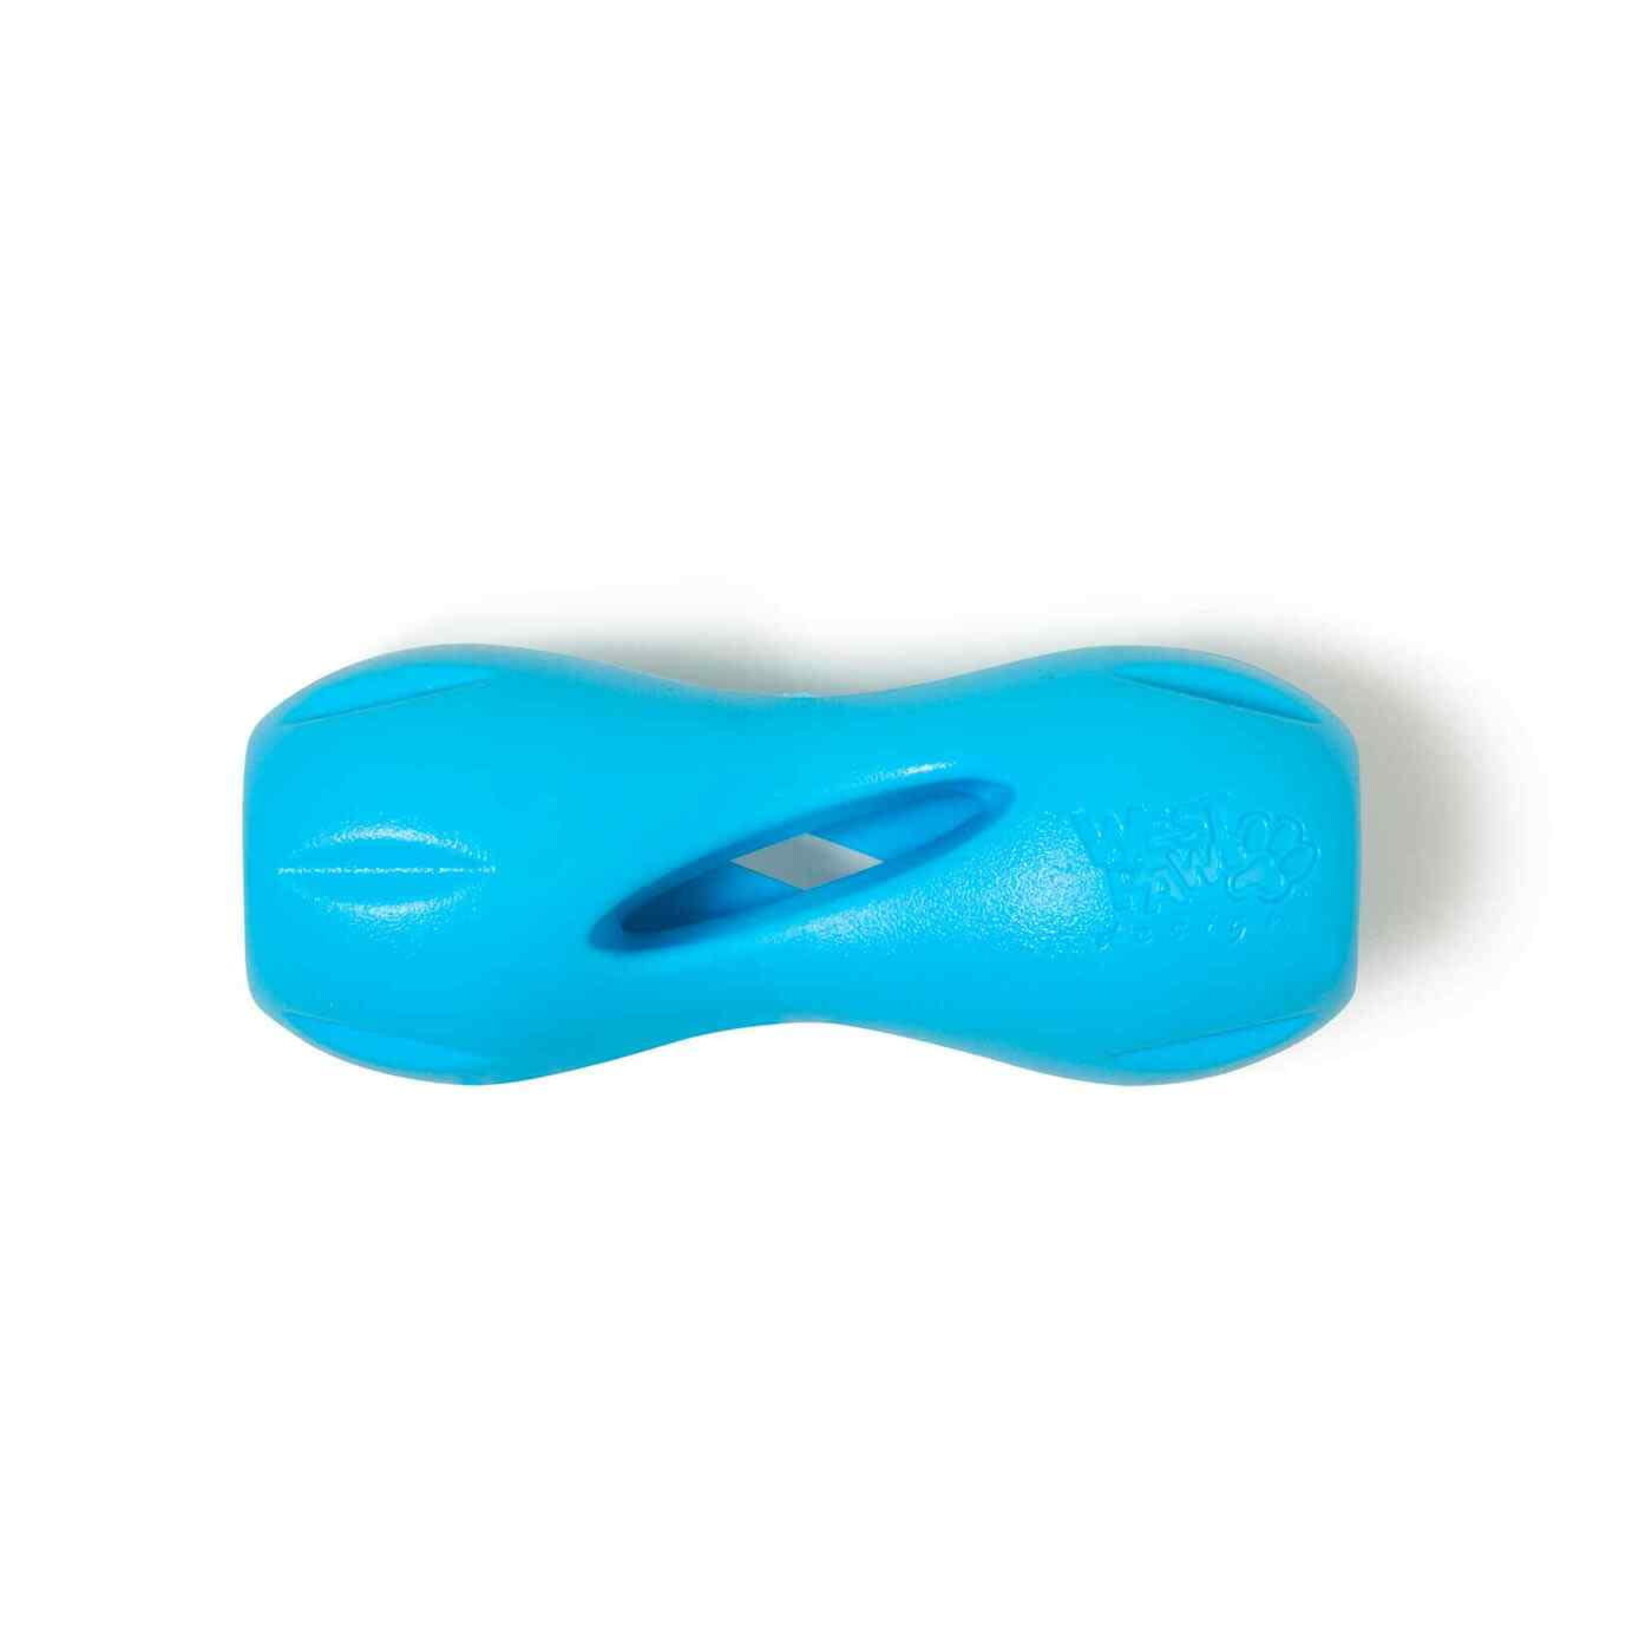 West Paw Qwizl Small 5.5" - Aqua blue dog toy